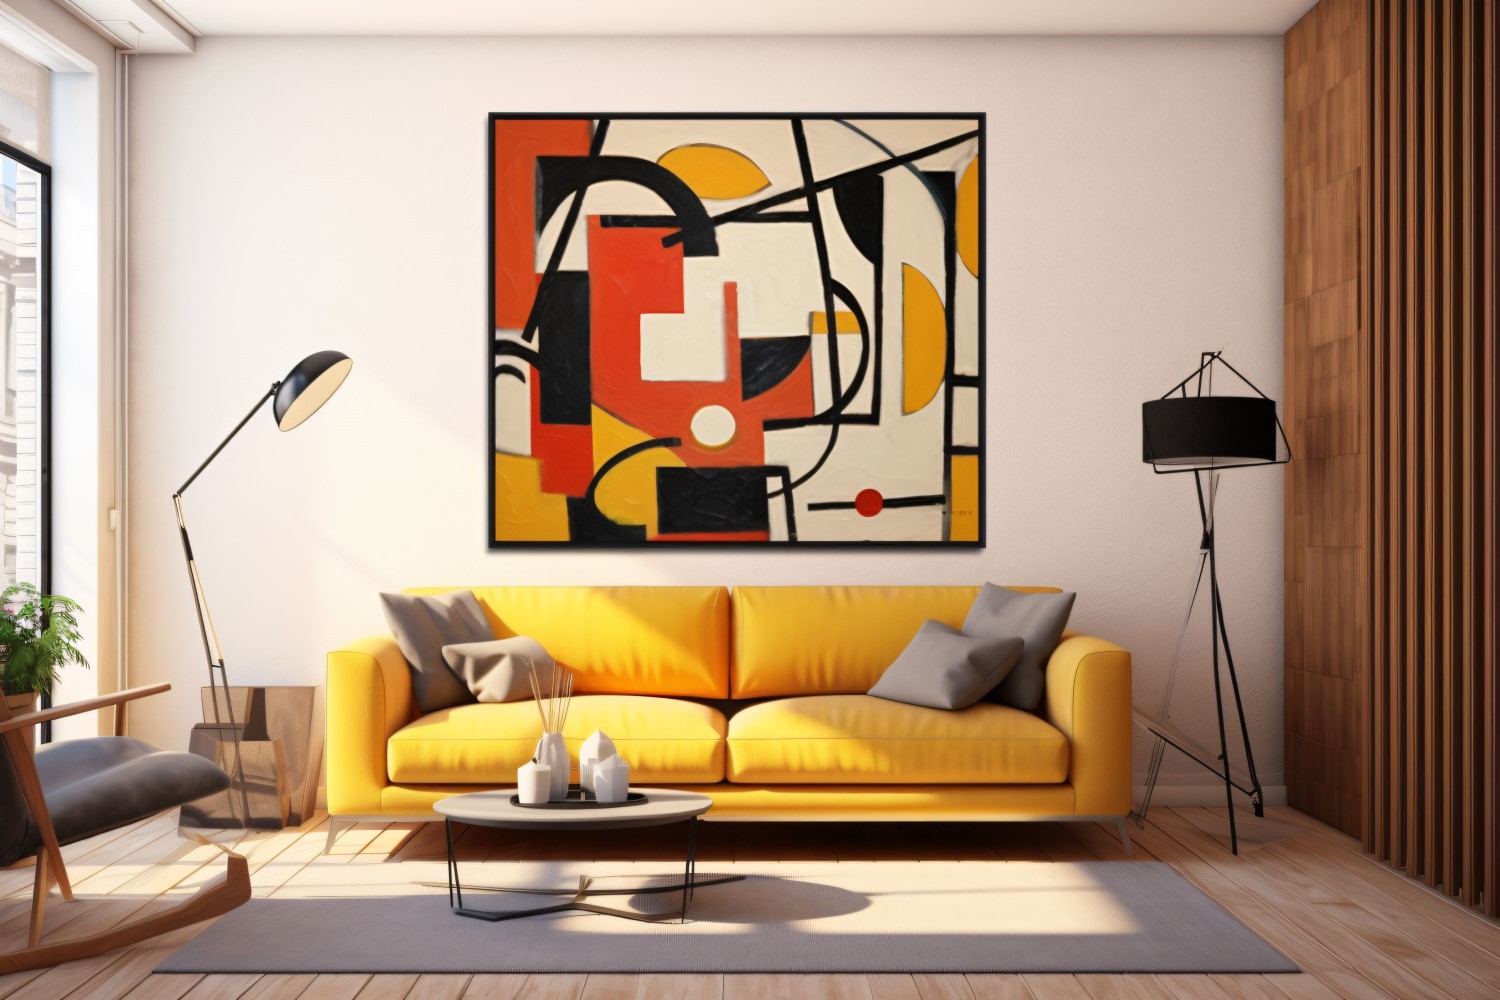 The Art of Italian Living Opulent Living Room Designs 817